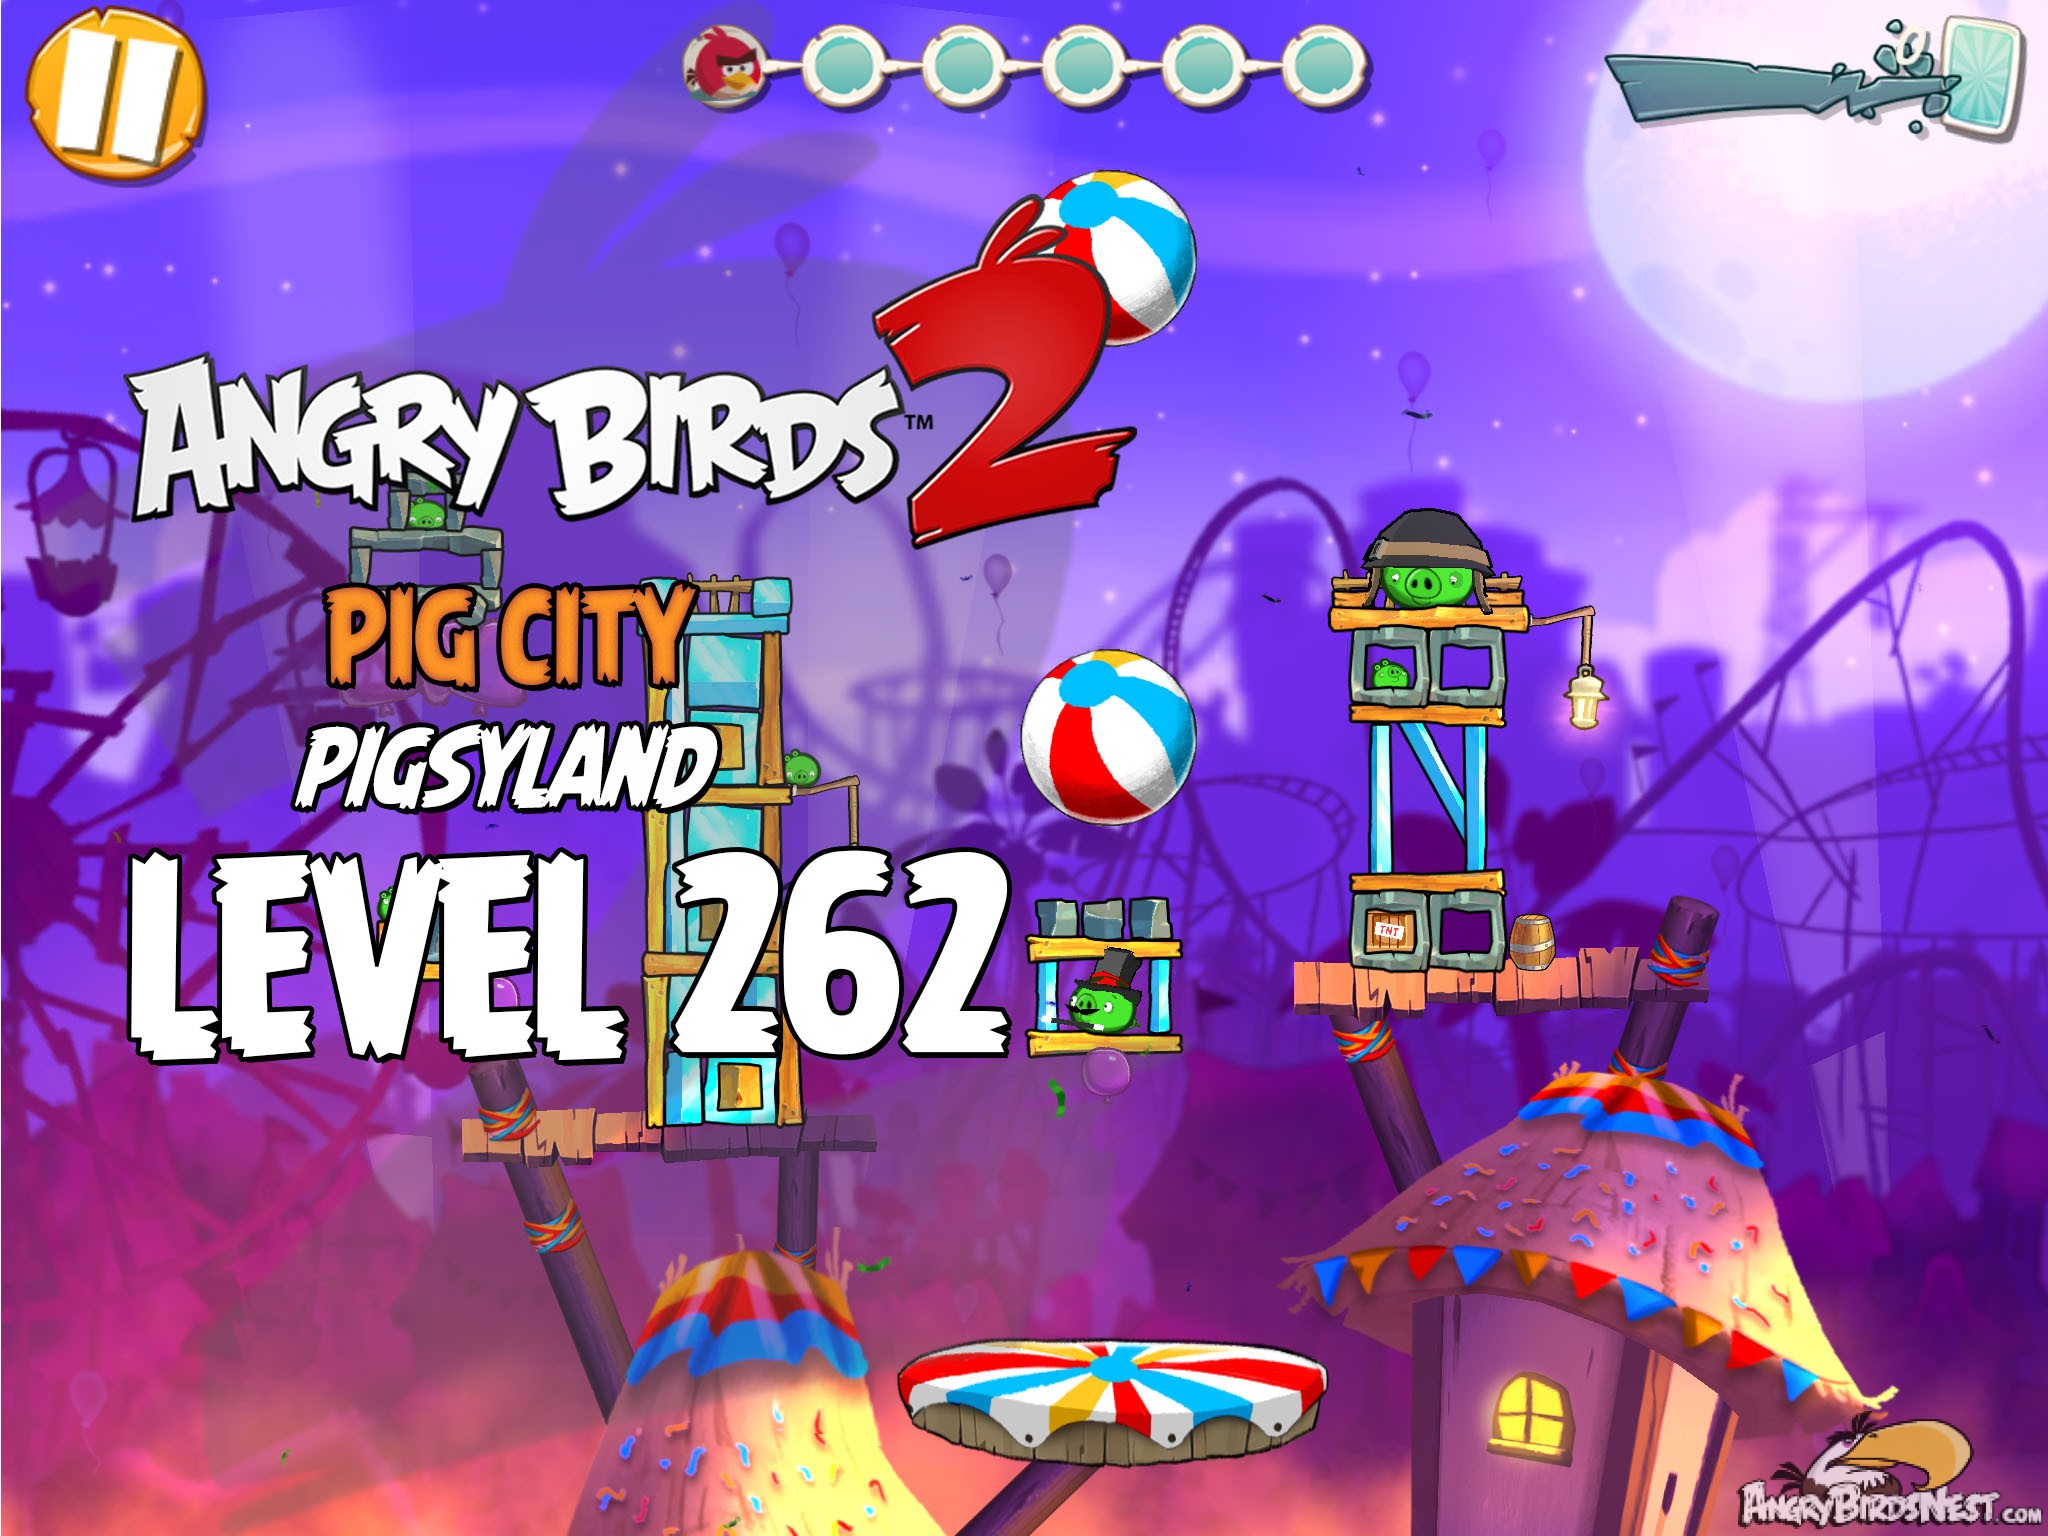 Angry Birds 2 Pig City Pigsyland Level 262